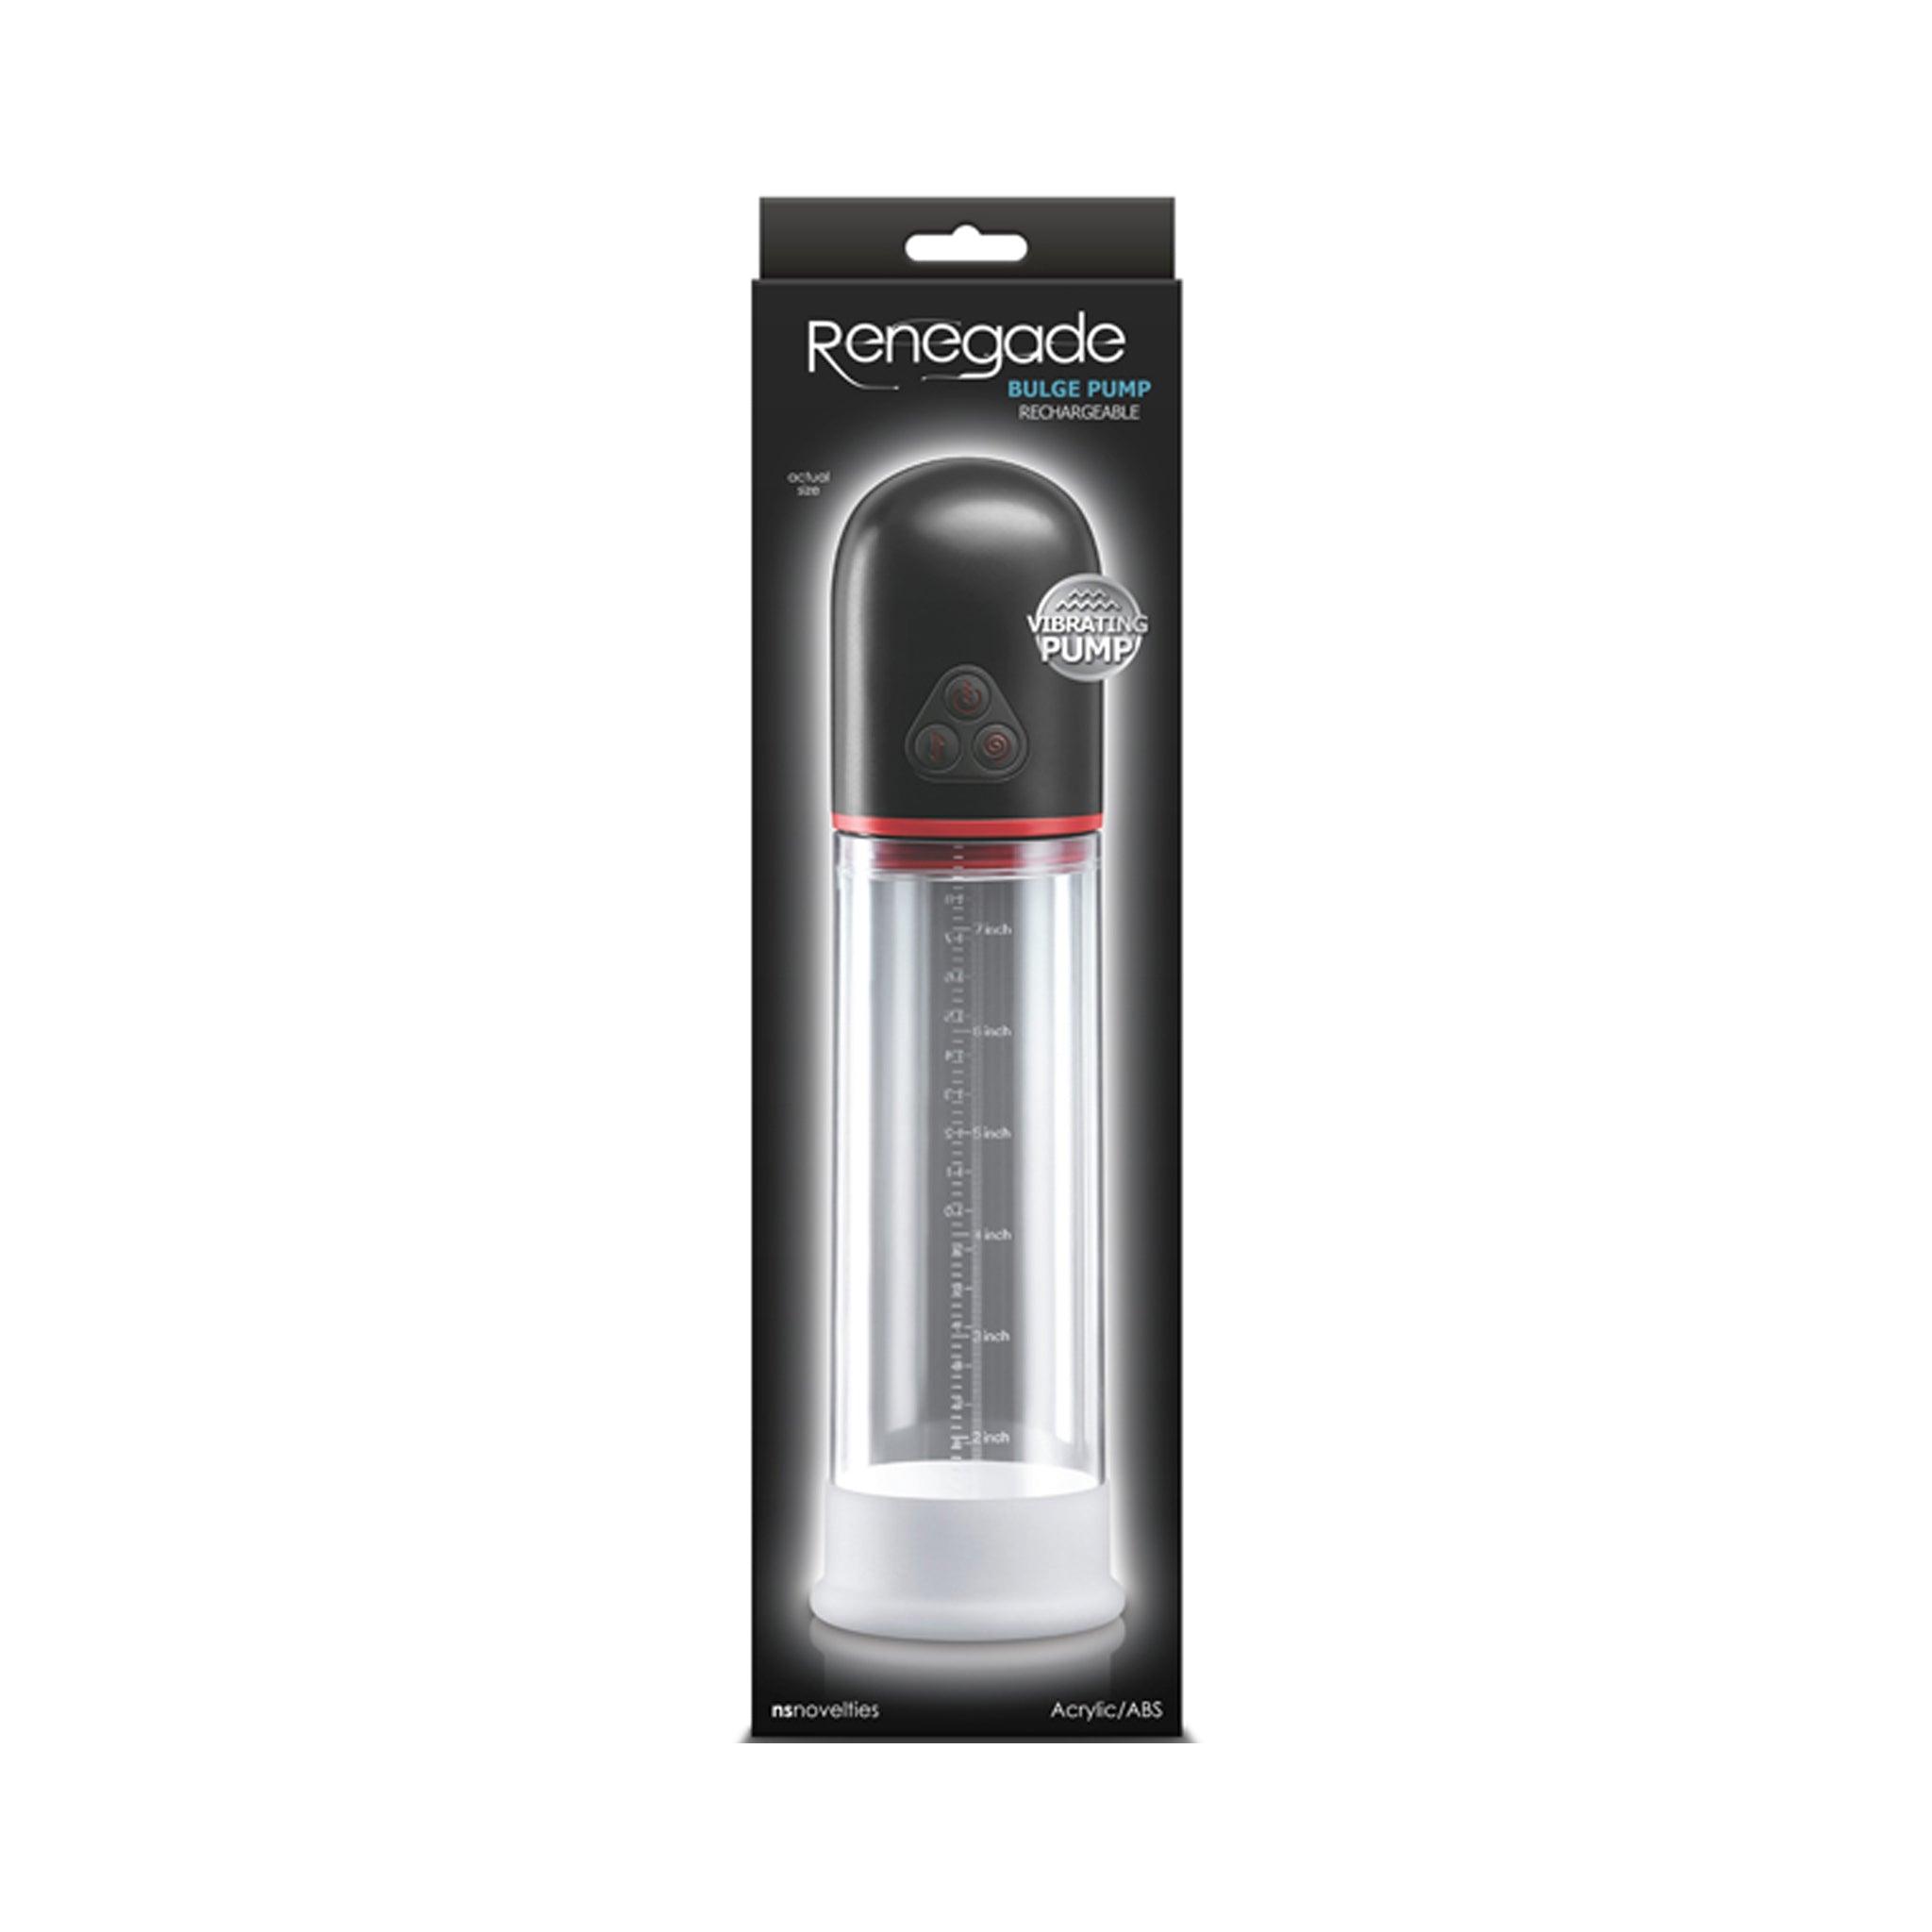 Renegade Bulge Pump - Vibrating & Rechargeable - CheapLubes.com